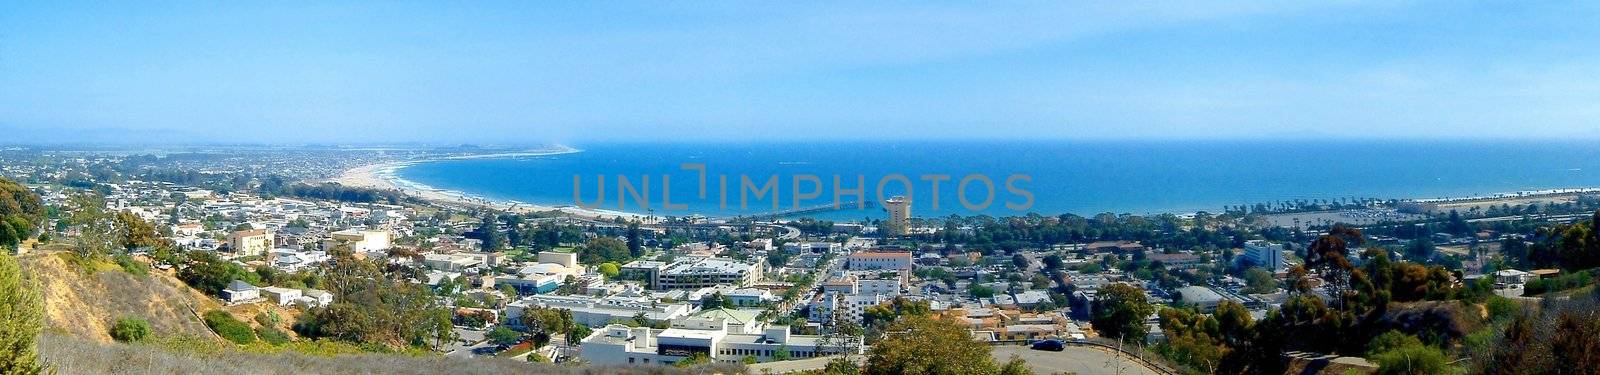 Ventura Ocean View by hlehnerer